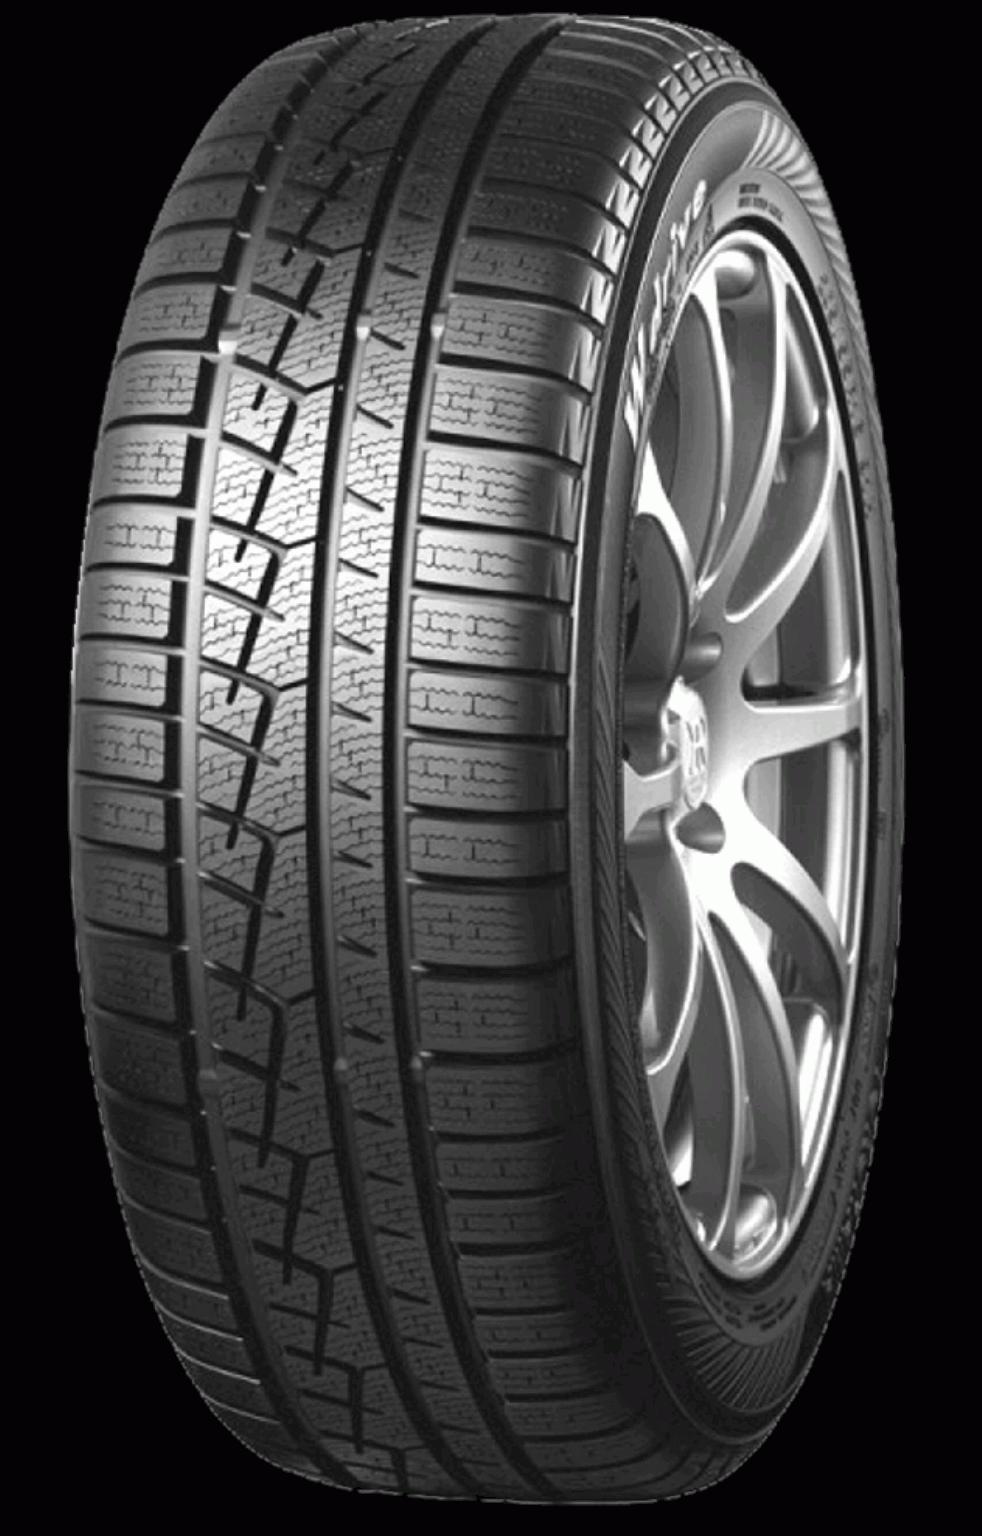 Yokohama W Drive - Tests and Tyre Reviews